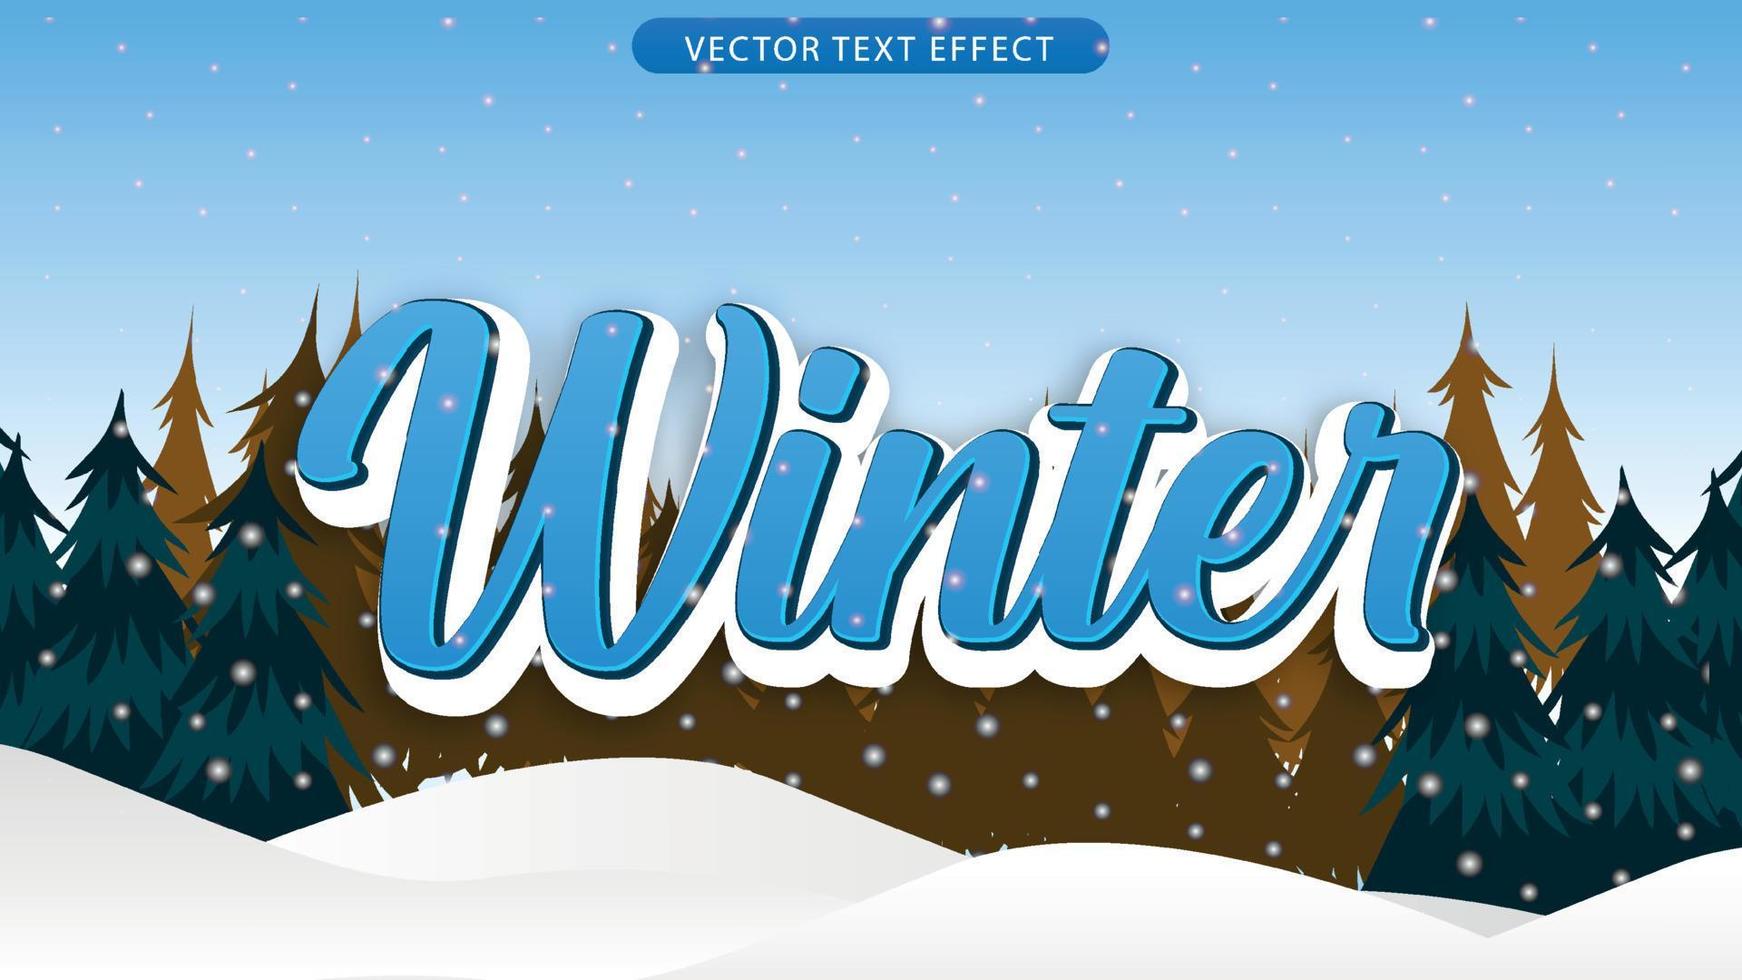 3D-Text-Wintermarkt-Vektordatei vektor